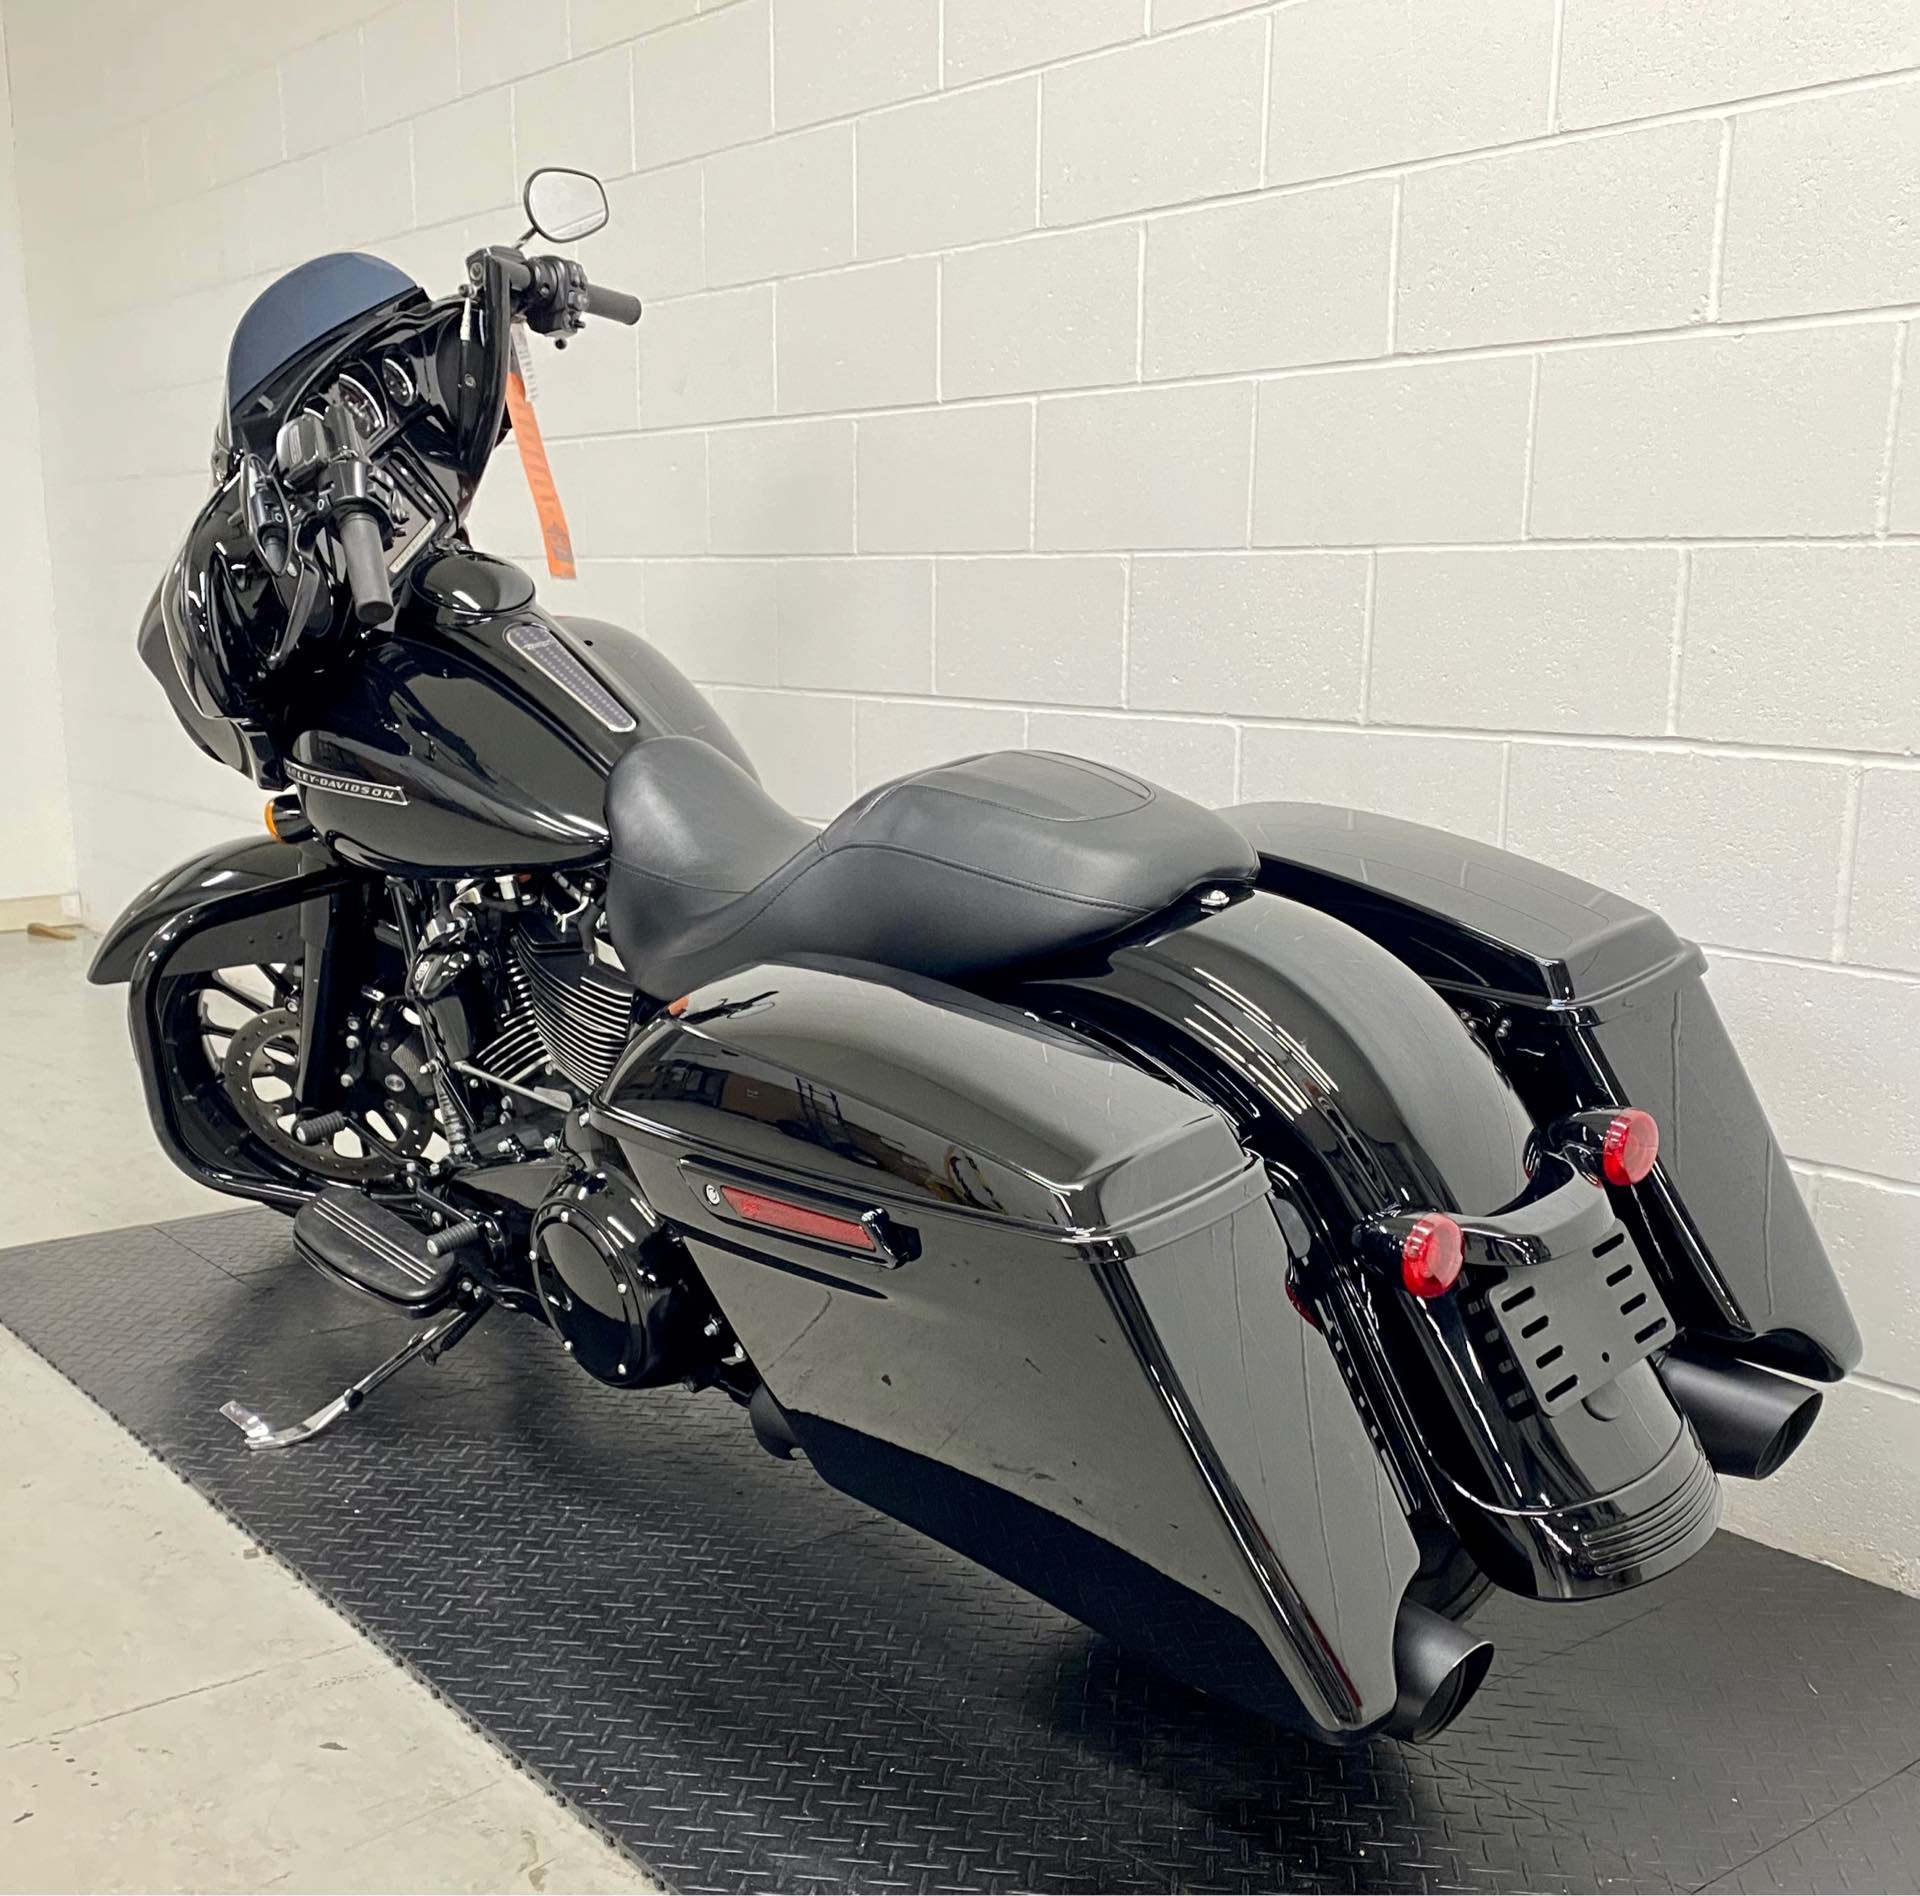 2018 Harley-Davidson Street Glide Special at Destination Harley-Davidson®, Silverdale, WA 98383